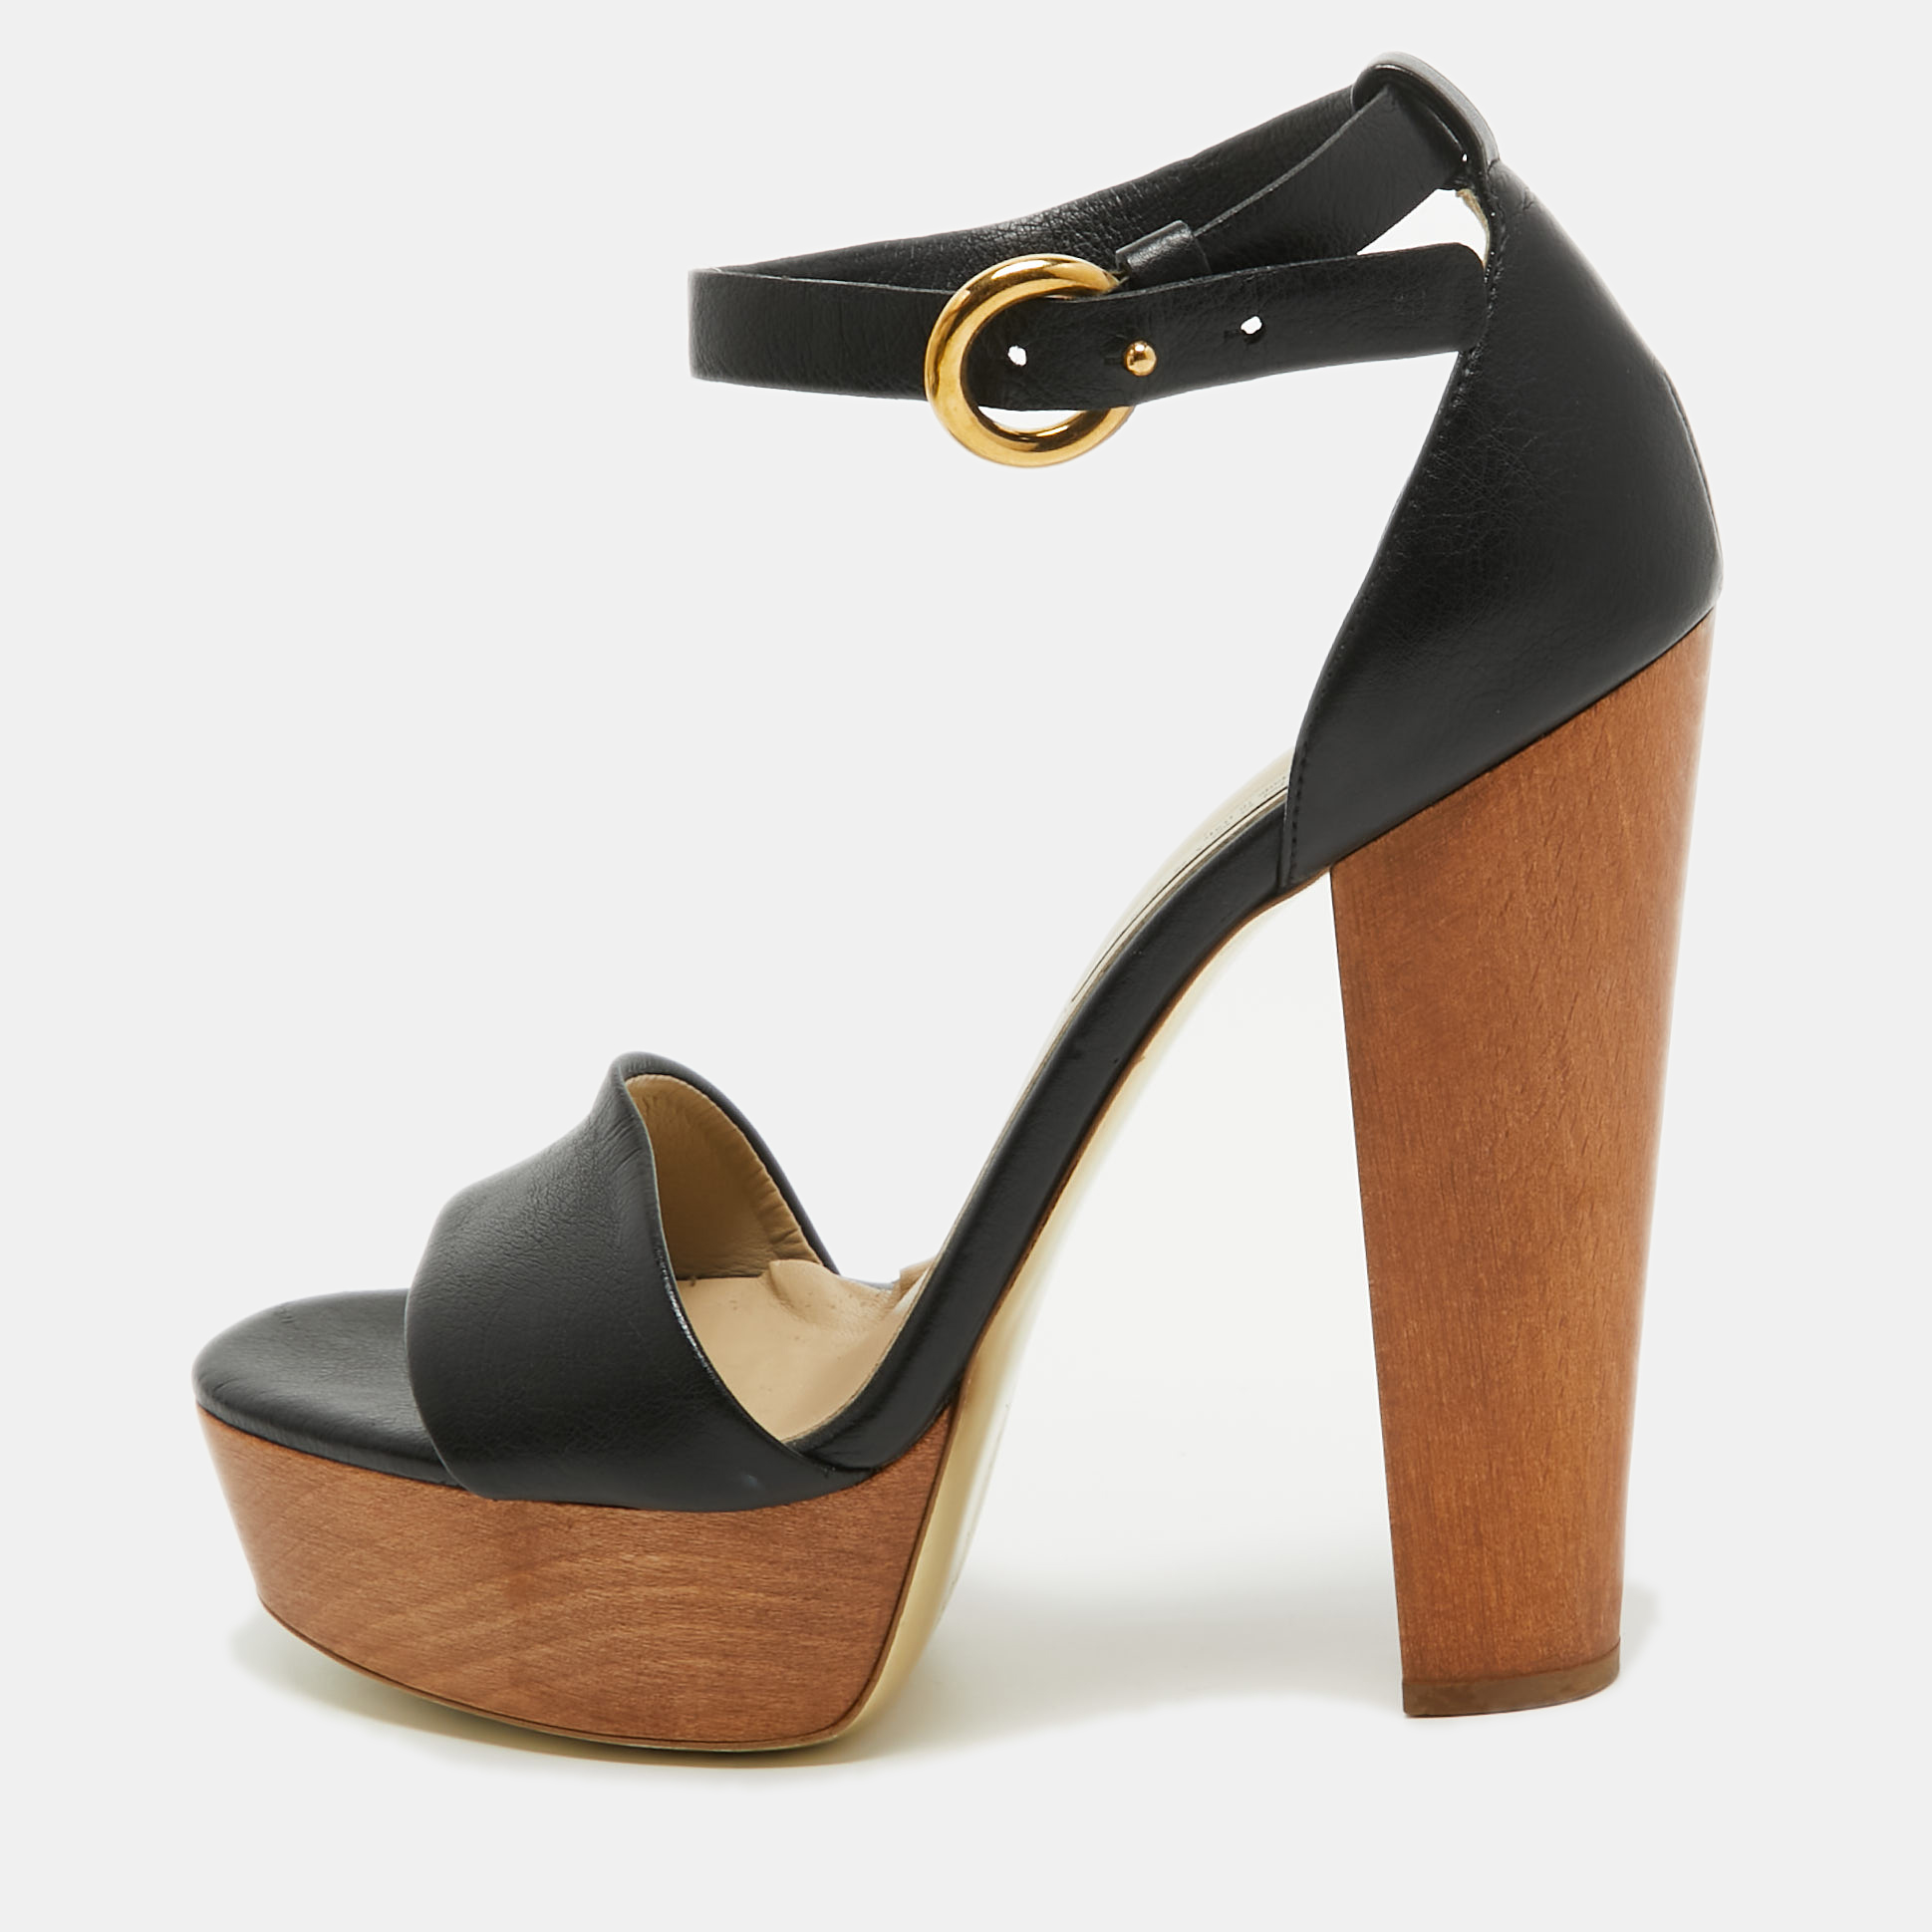 Stella mccartney black faux leather wooden platform ankle strap sandals size 40